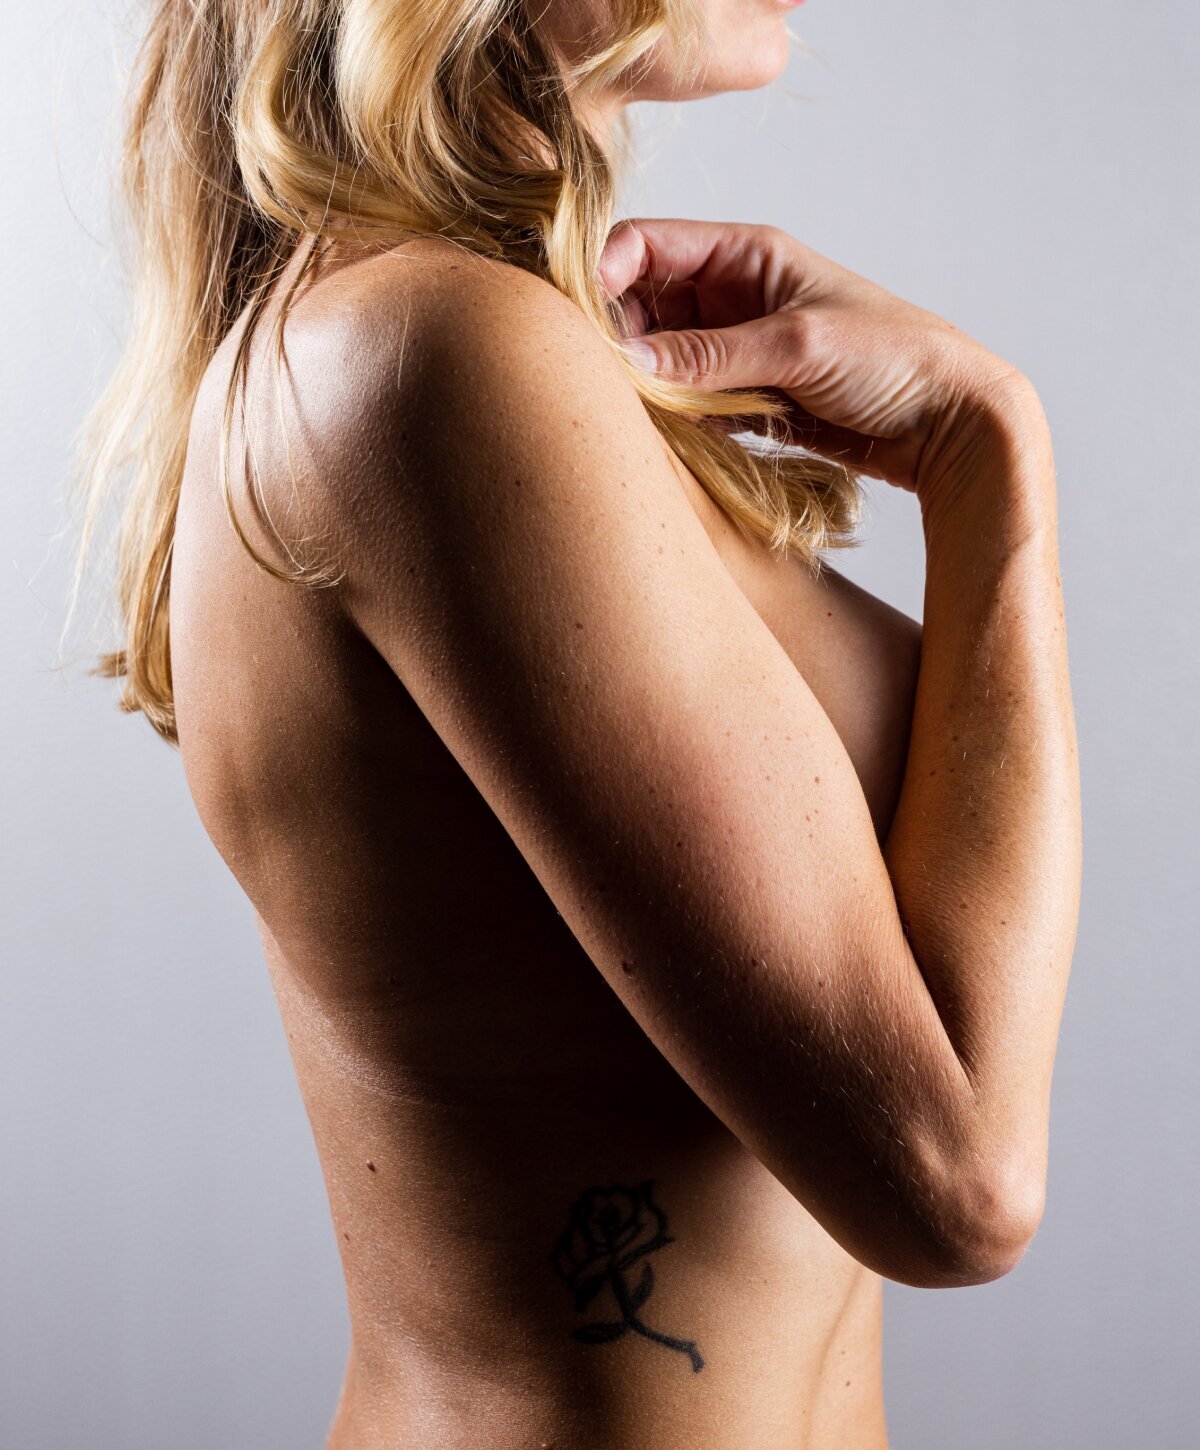 Boca Raton breast augmentation model with blonde hair